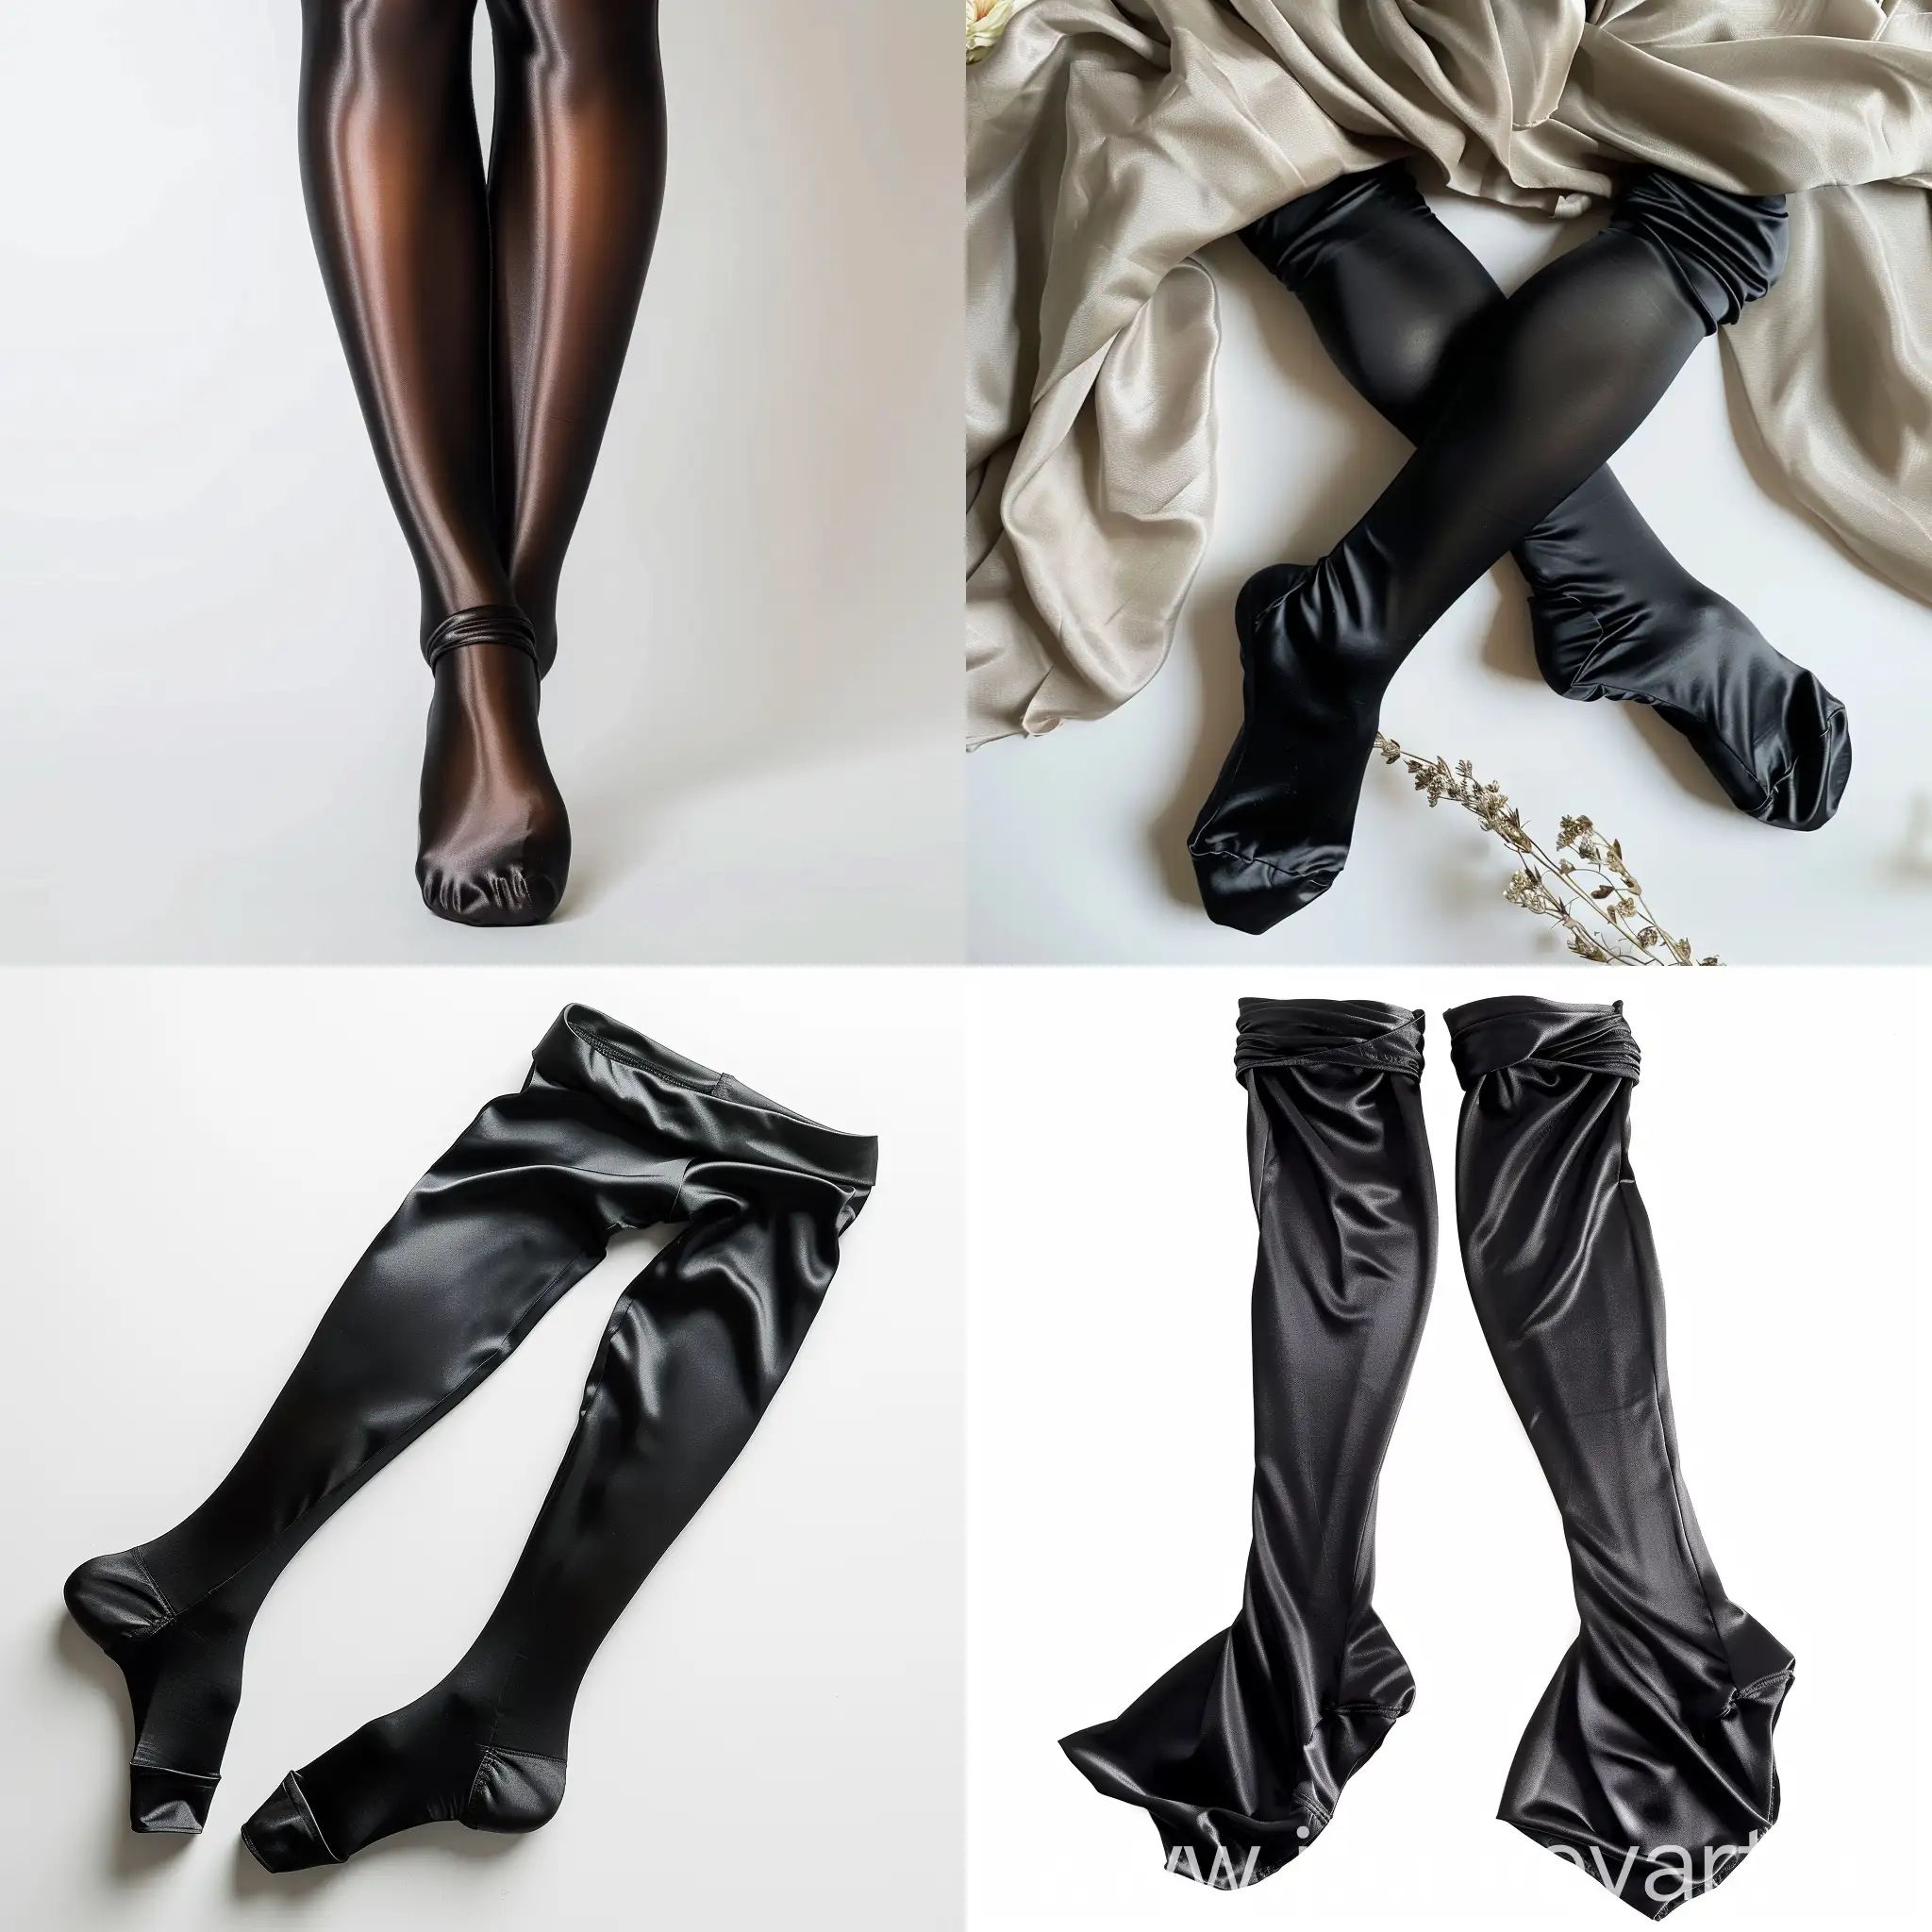 Elegant-Black-Silk-Stockings-on-Display